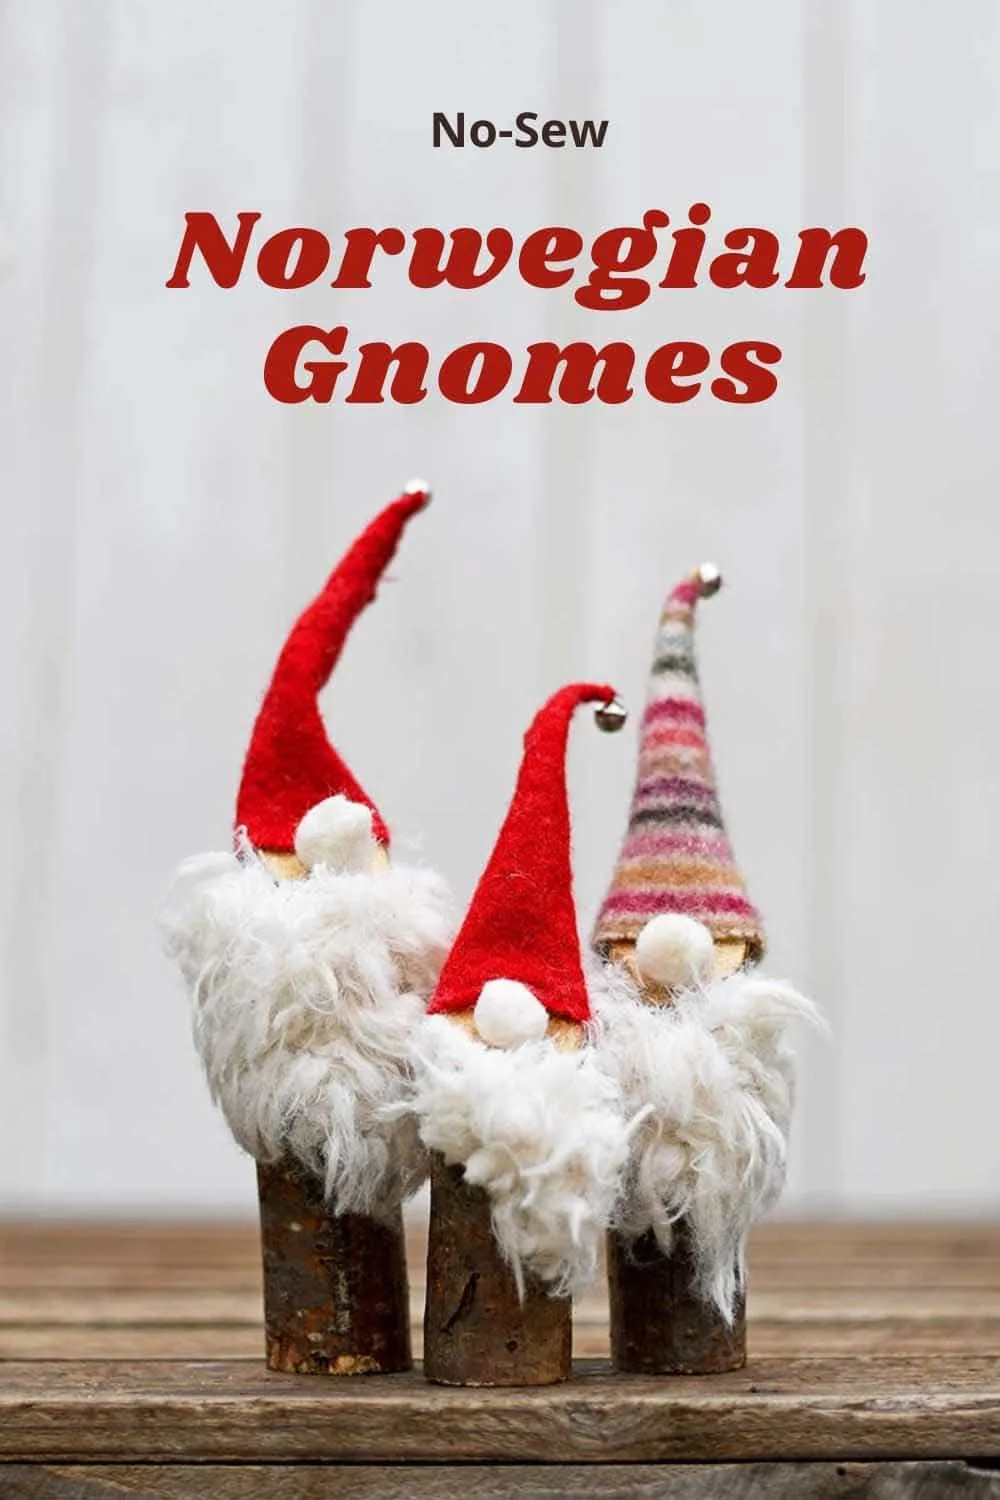 No-sew Norwegian gnomes